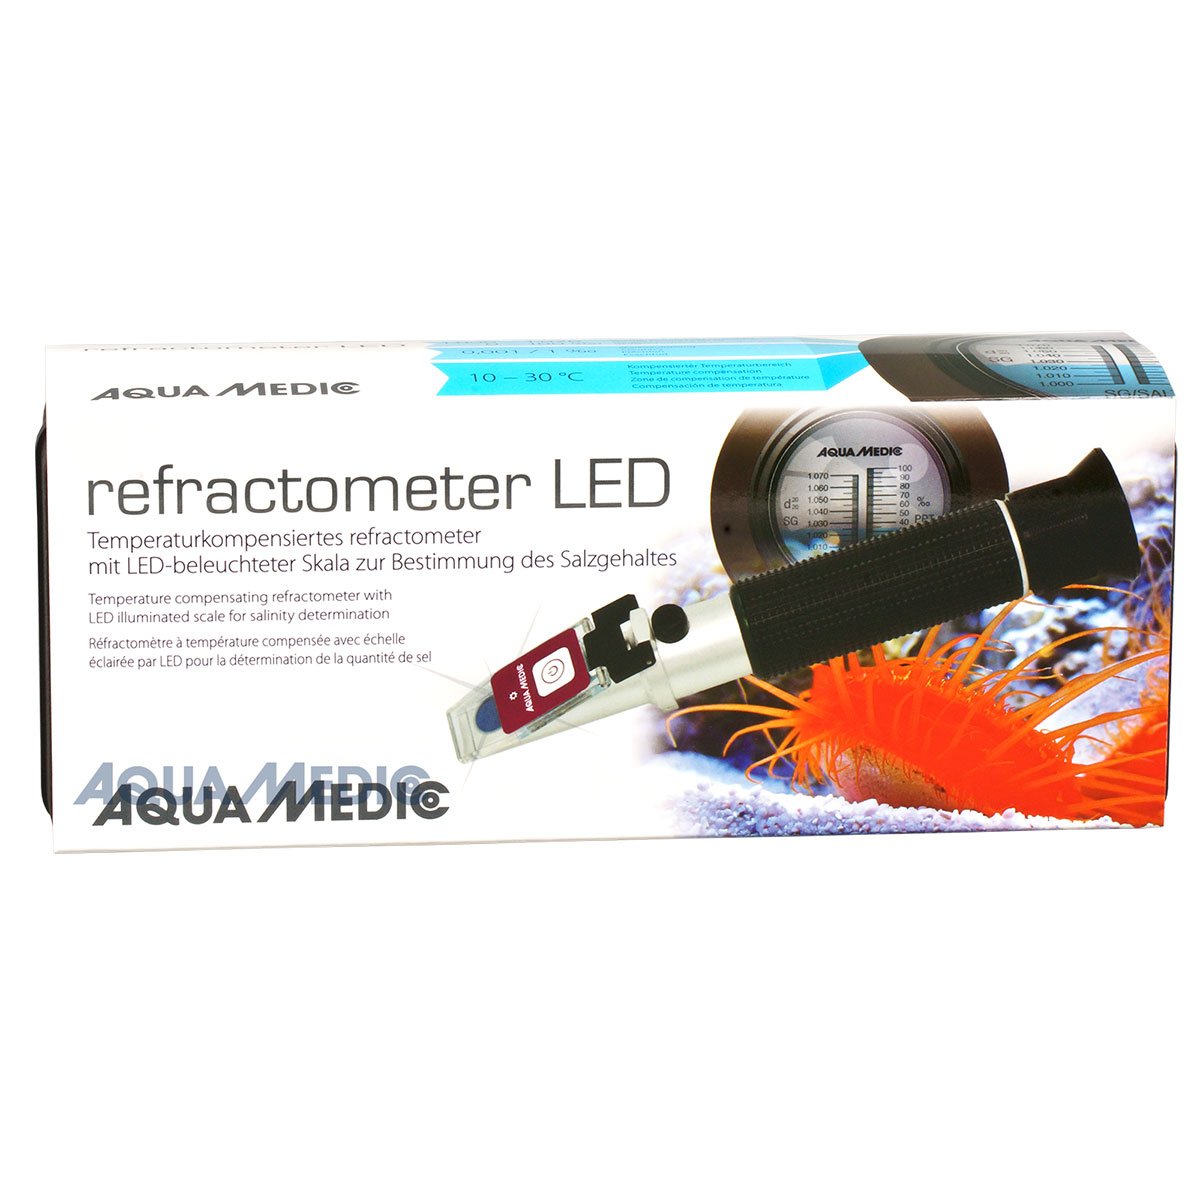 Aqua Medic refractometer LED von Aqua Medic